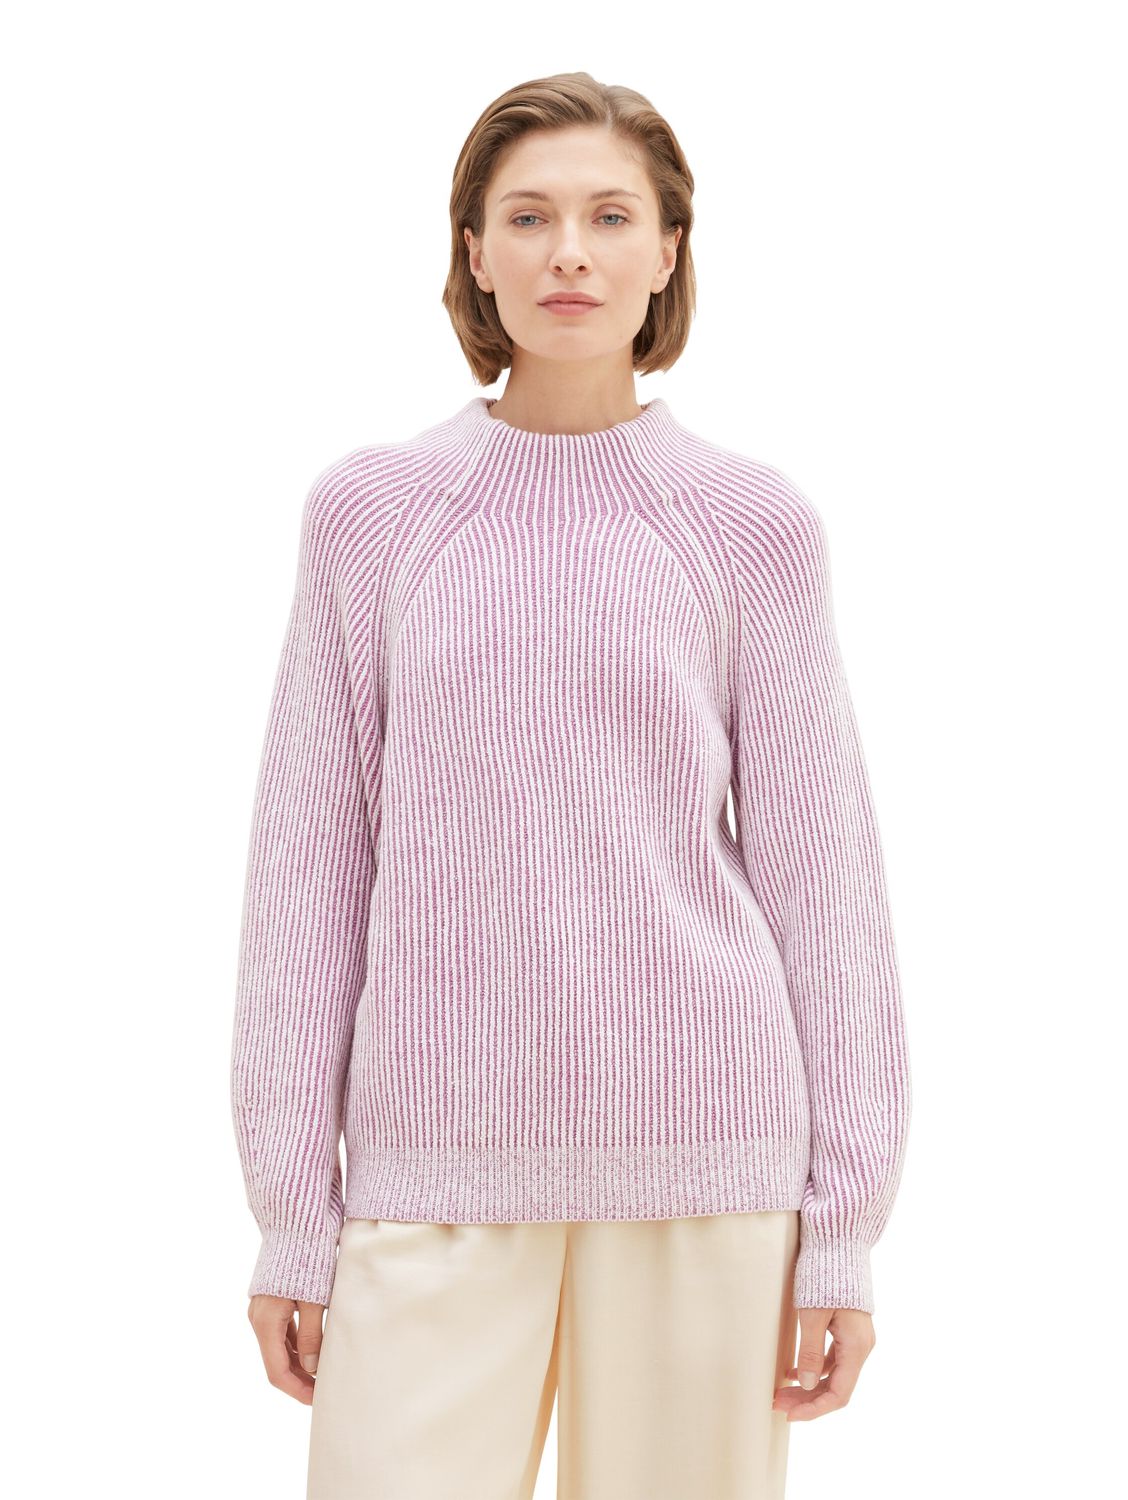 Tom Tailor Damen Pullover KNIT STRIPED - Relaxed Fit günstig kaufen